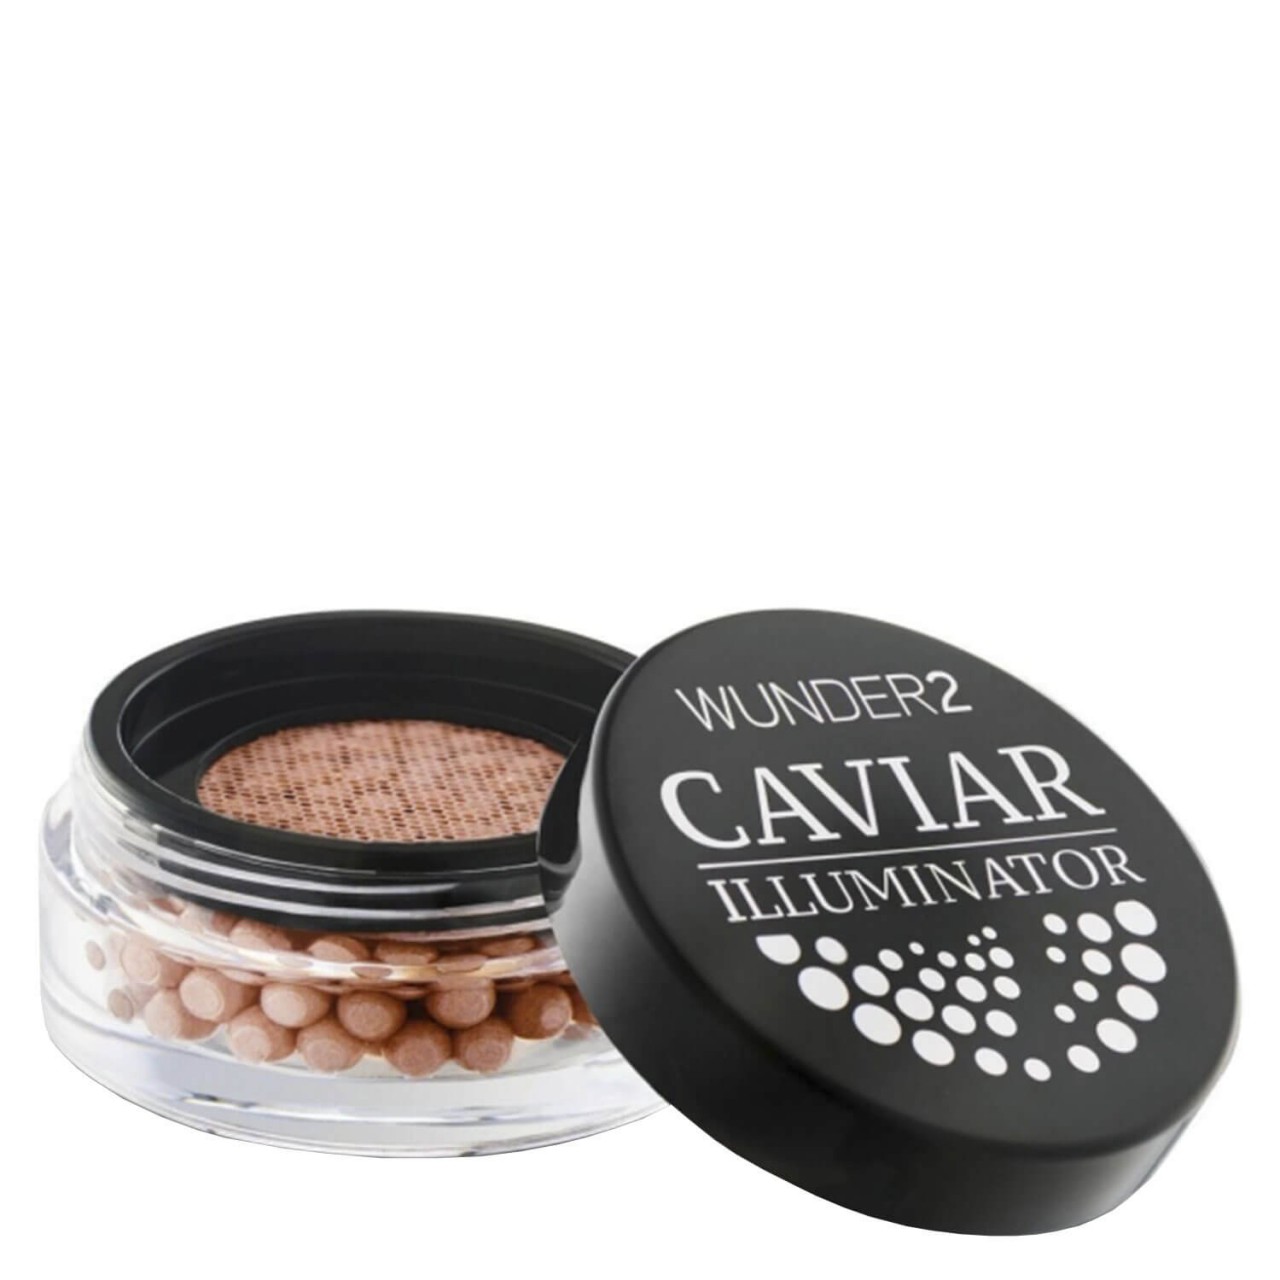 WUNDER2 - Caviar Illuminator Mother of Pearl von WUNDER2